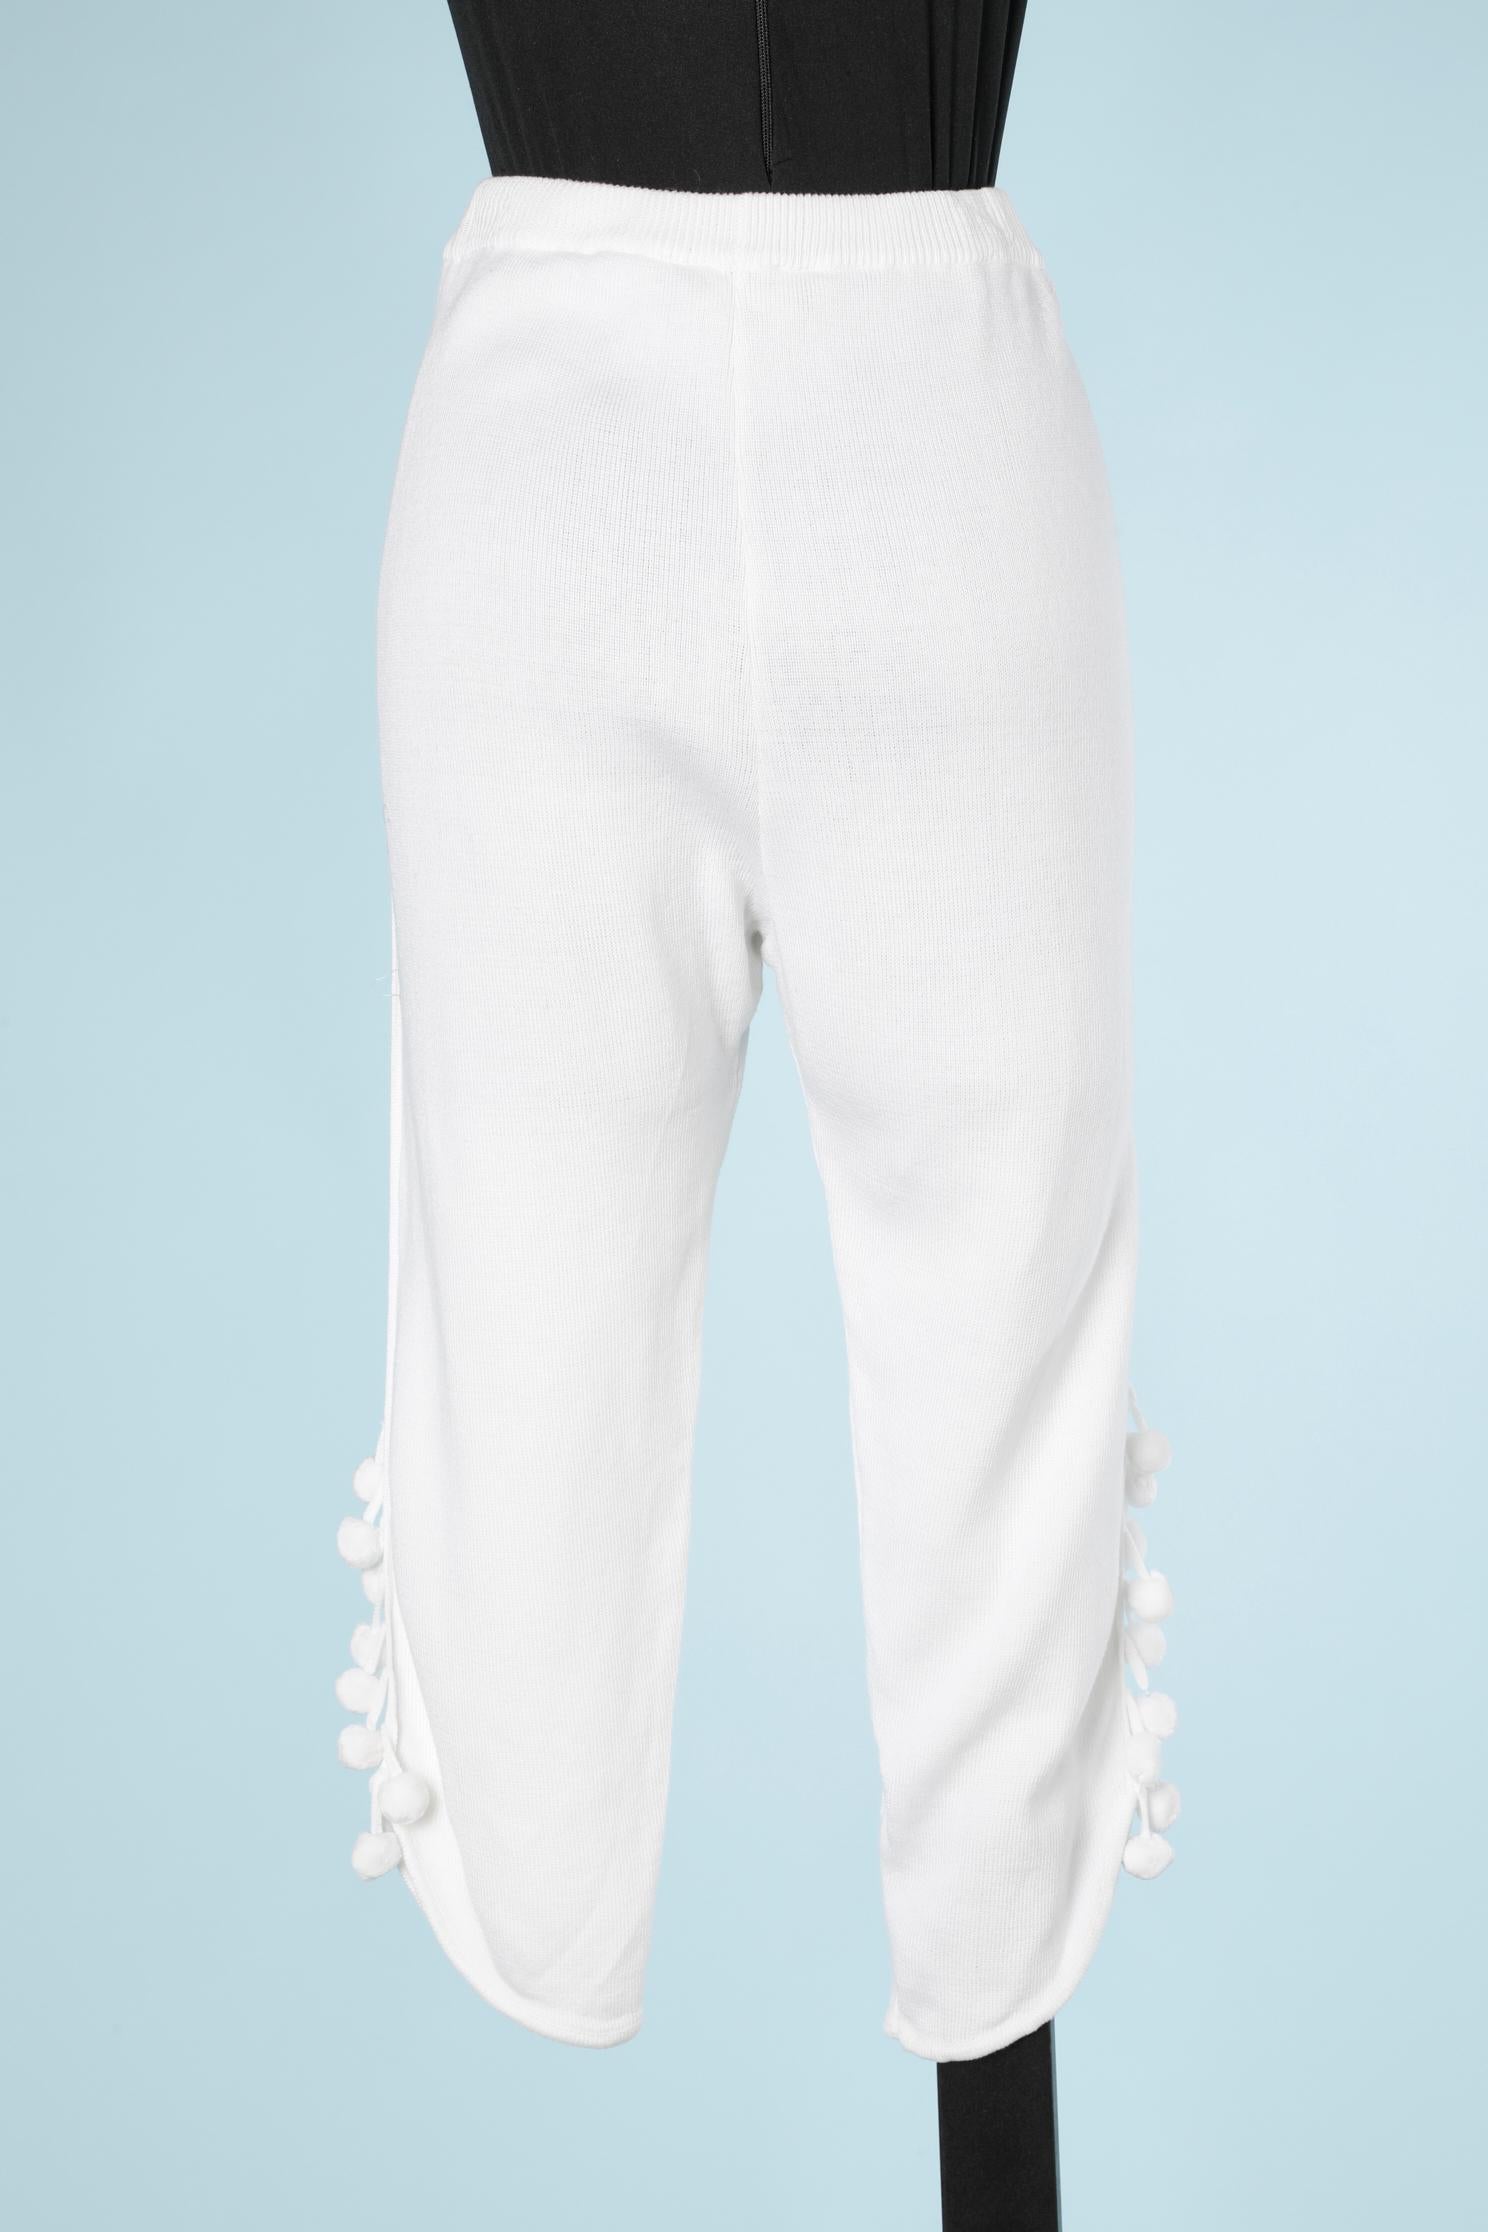 White cotton knit short-pant with white pompom Chantal Thomass  In Excellent Condition For Sale In Saint-Ouen-Sur-Seine, FR